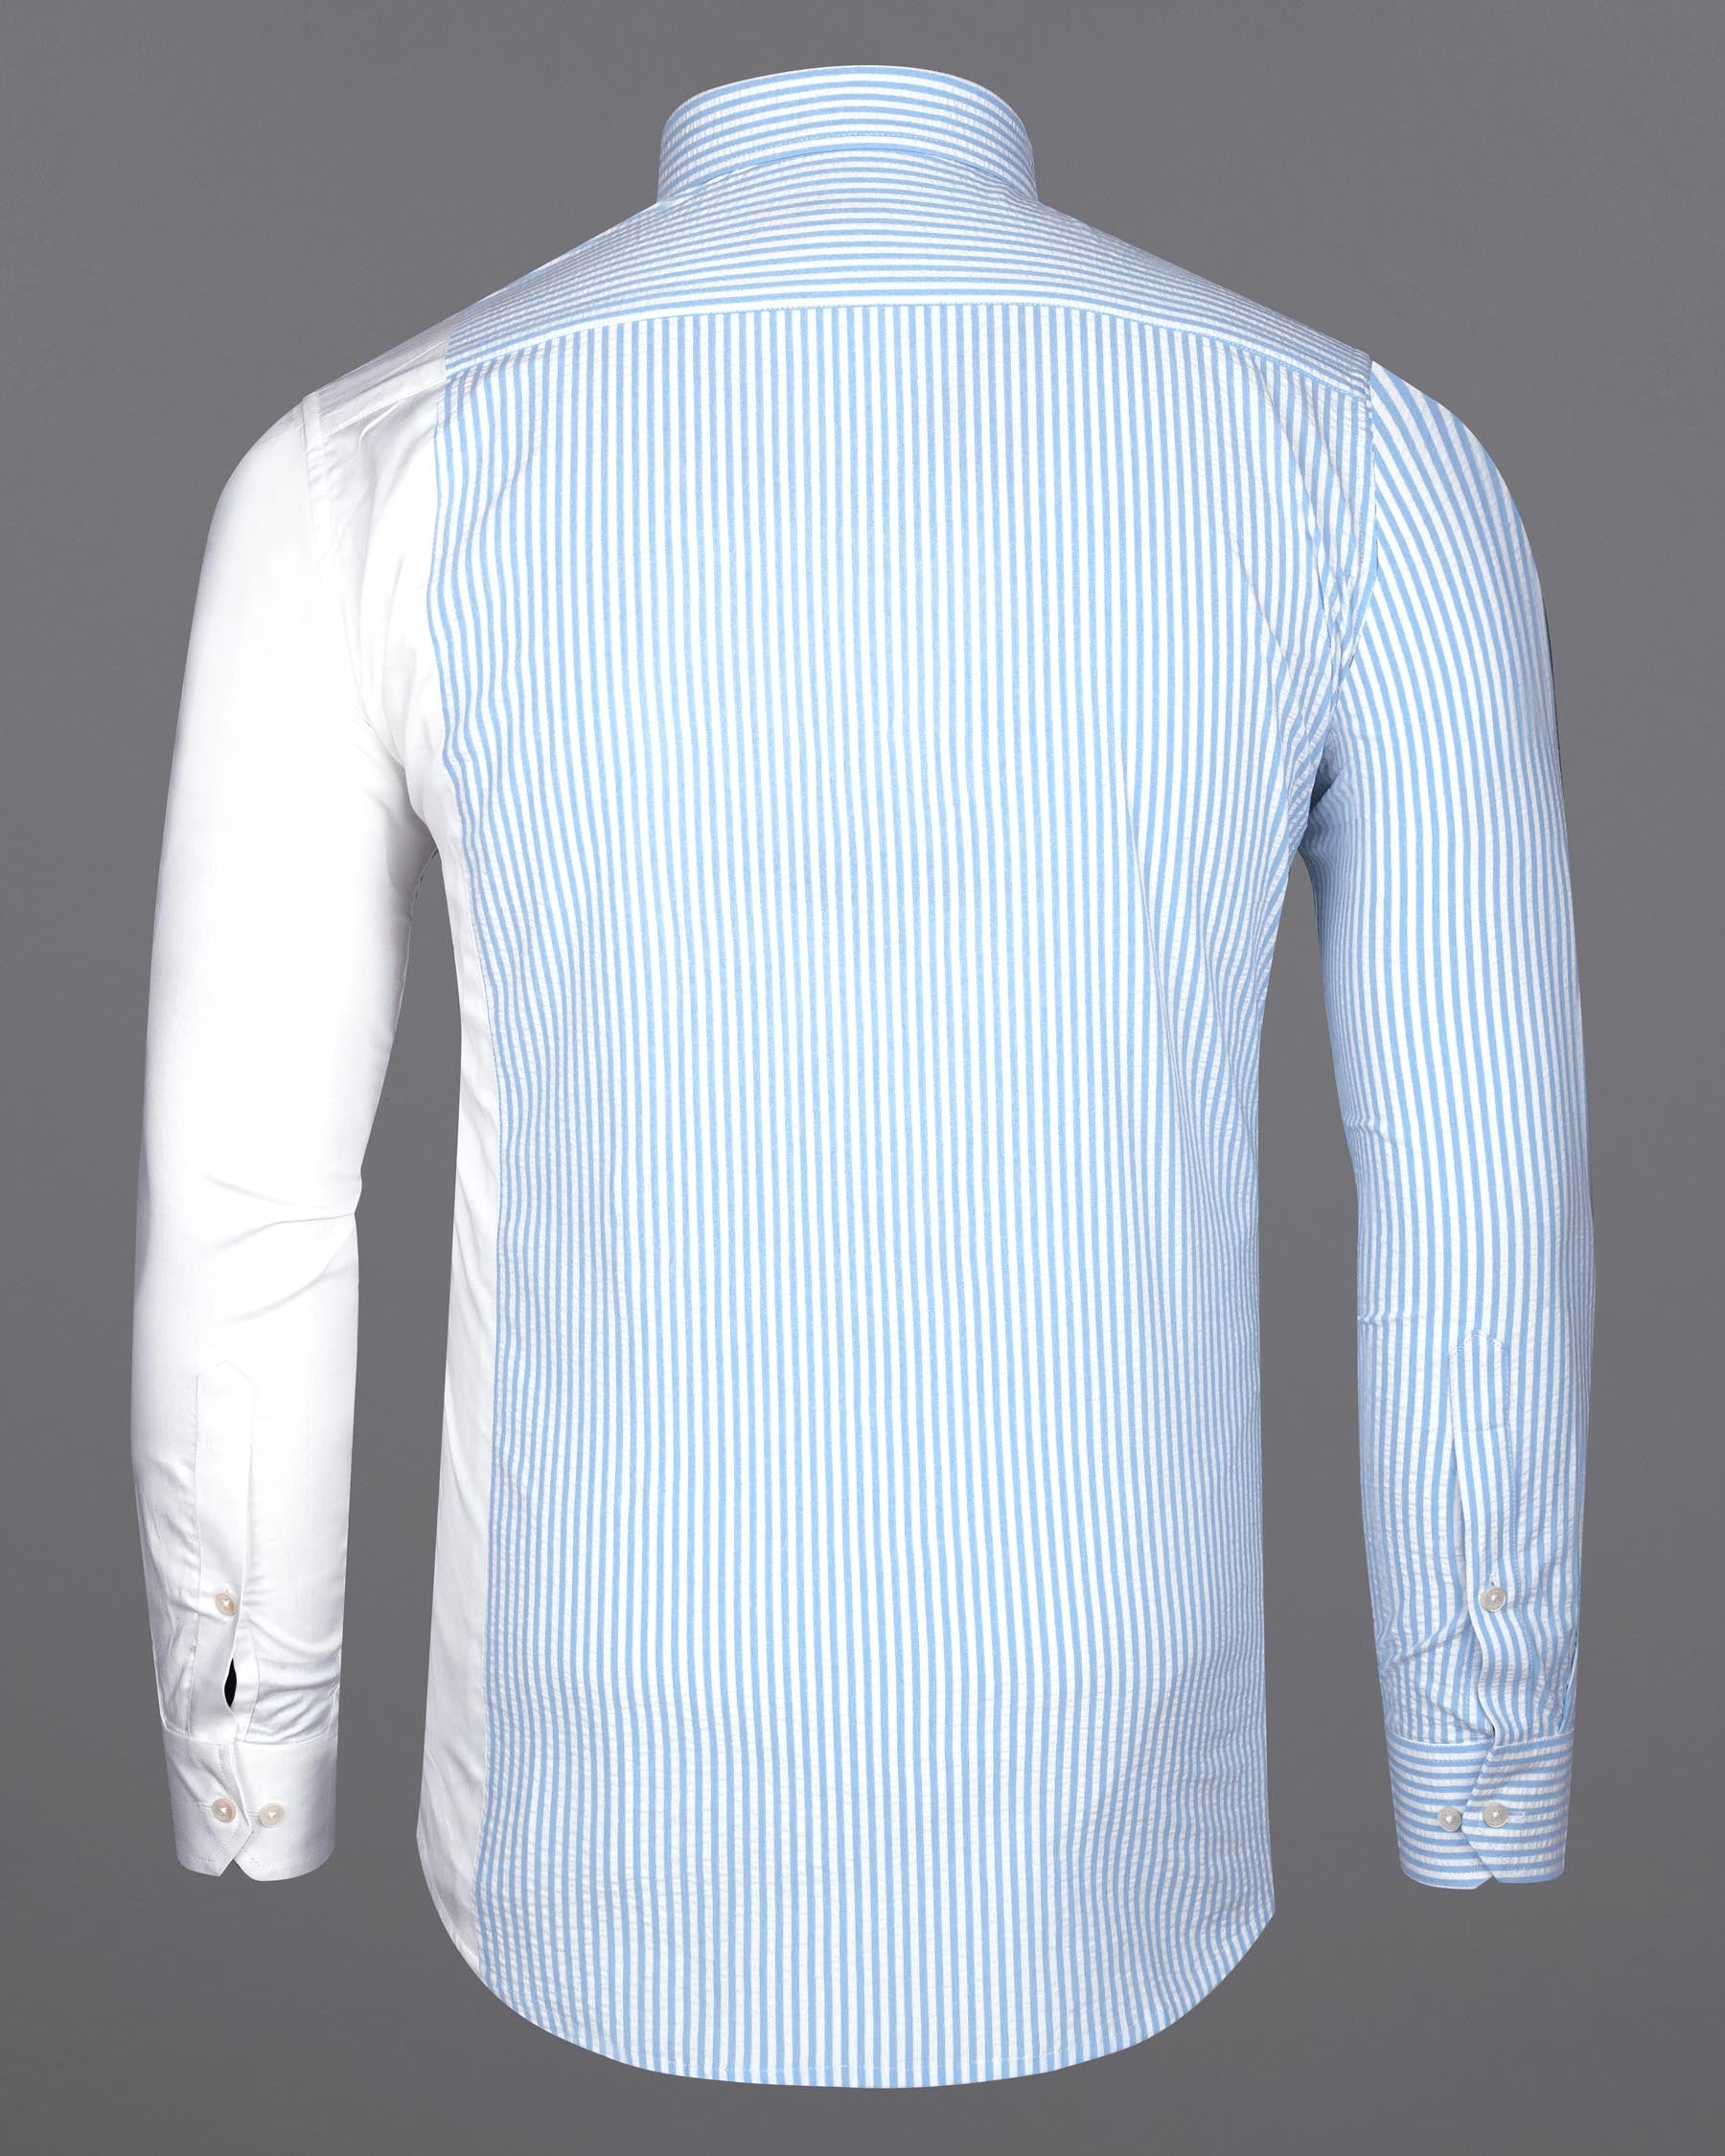 Casper Blue and White Pin Striped Premium Cotton Designer Shirt 7854-P111-38, 7854-P111-39, 7854-P111-40, 7854-P111-42, 7854-P111-44, 7854-P111-46, 7854-P111-48, 7854-P111-50, 7854-P111-52